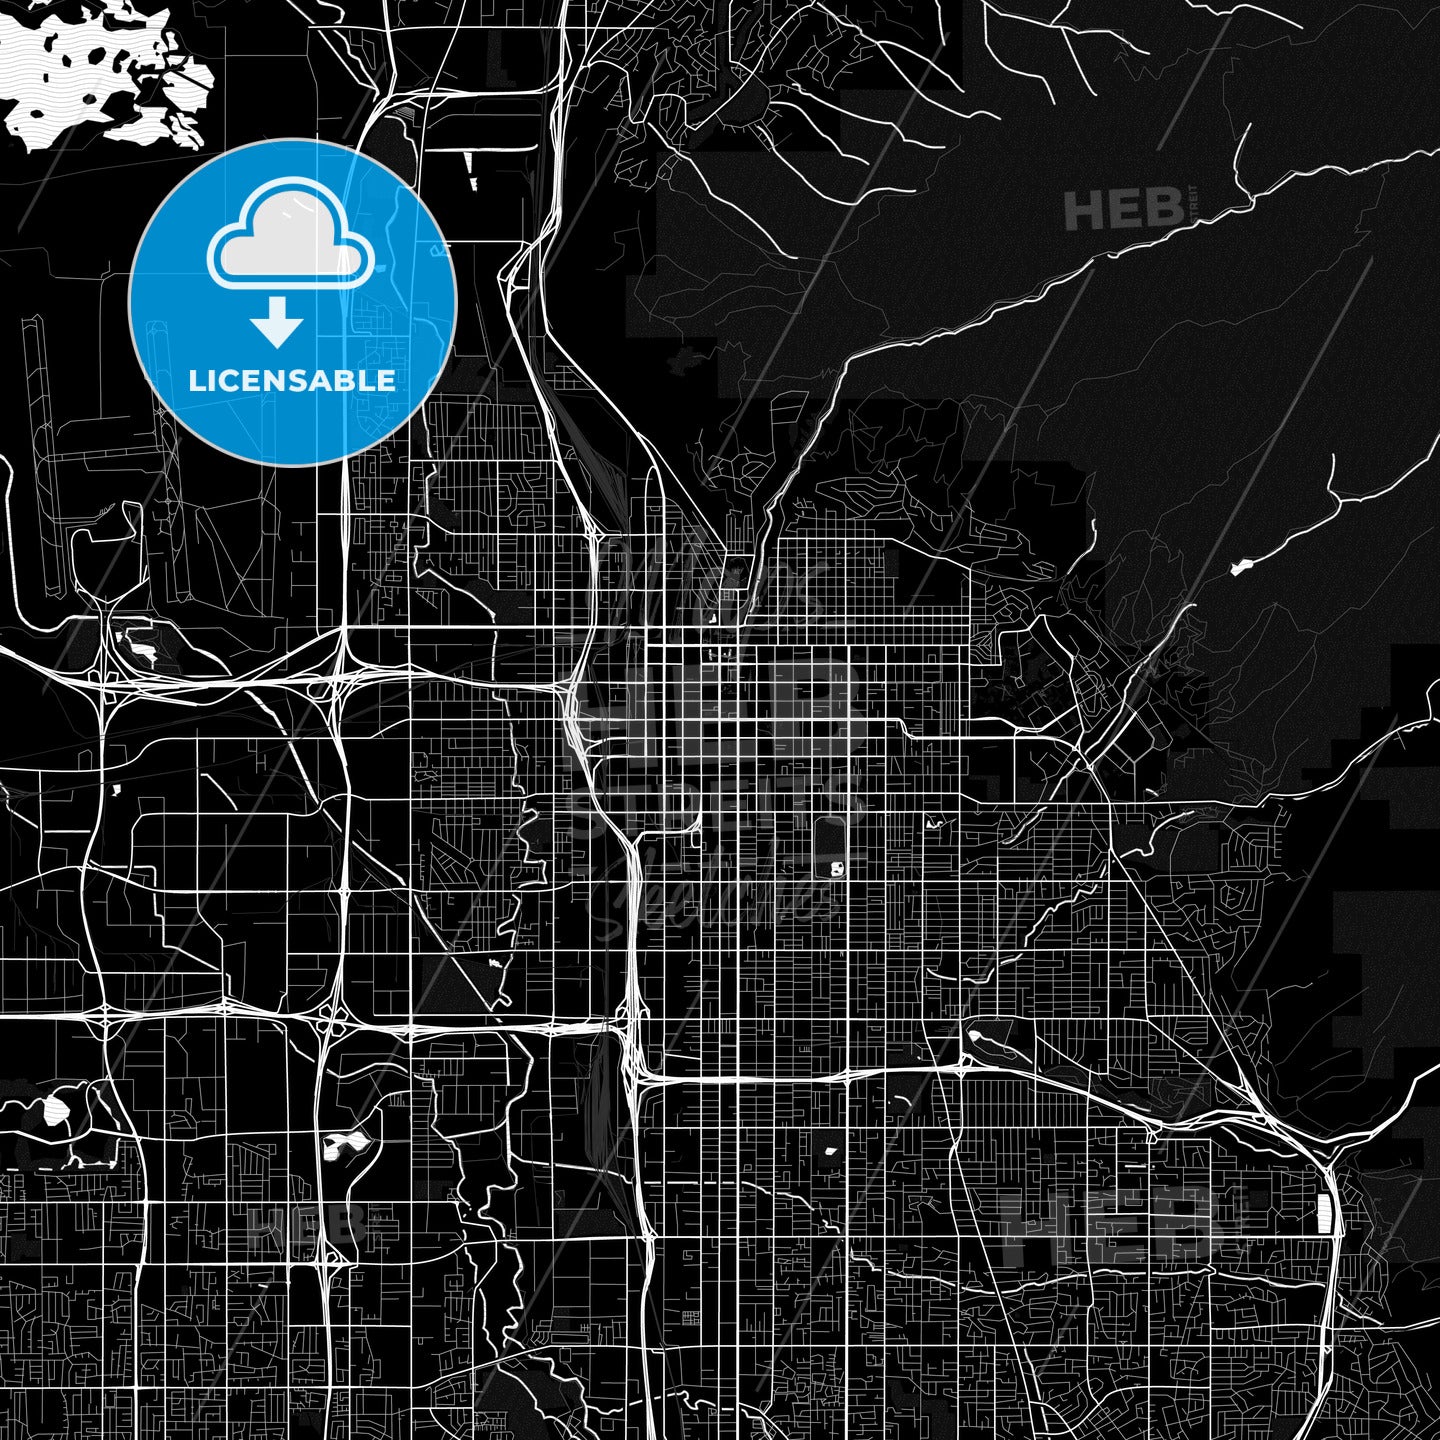 Salt Lake City, Utah, United States, PDF map